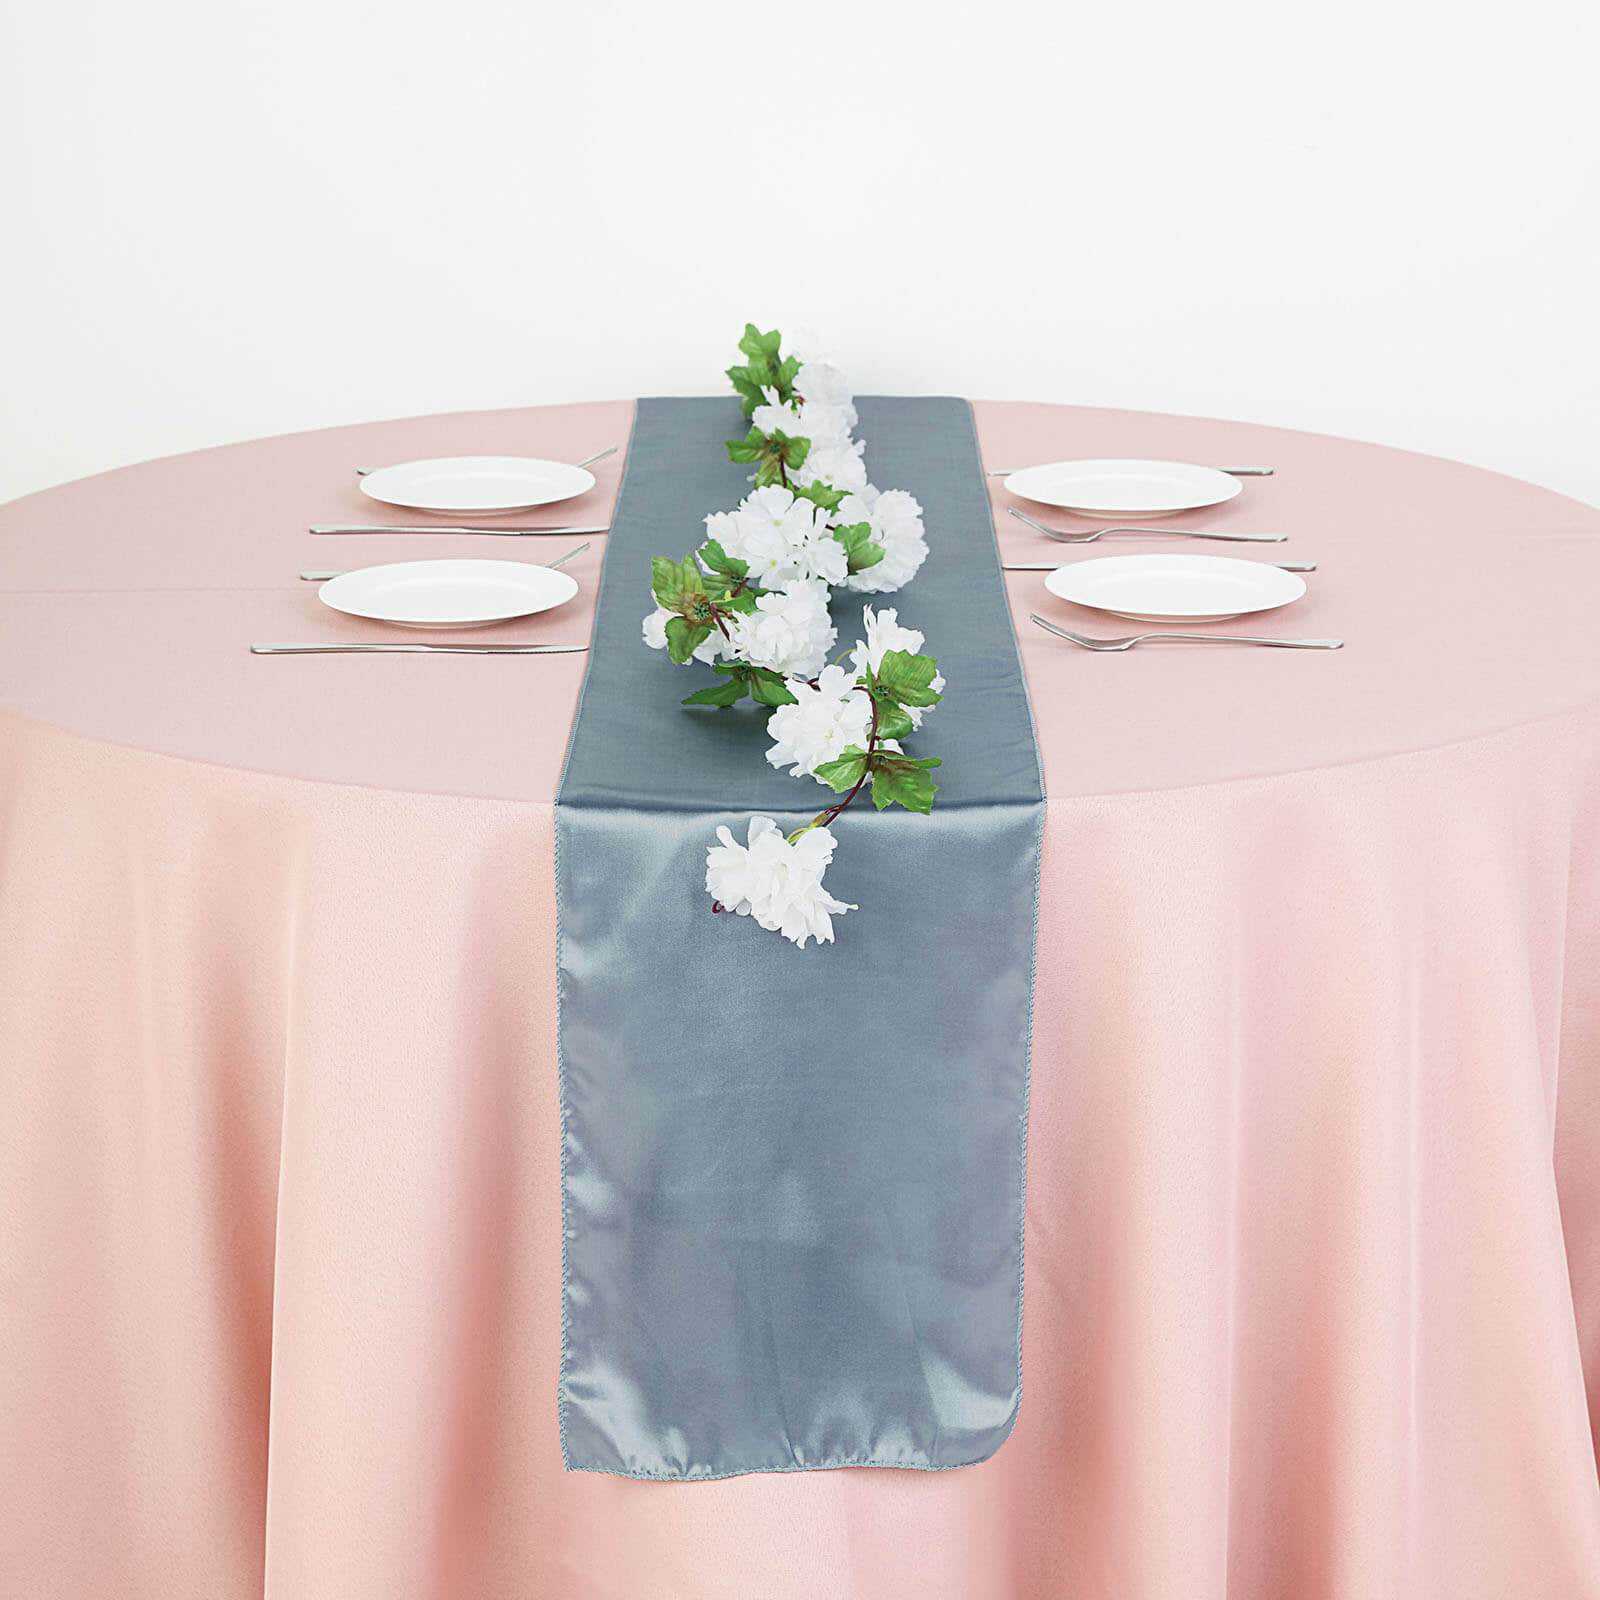 12x Plaster Foam Flower Stamen Artificial Floral Bridal Home Wedding Party Decor 